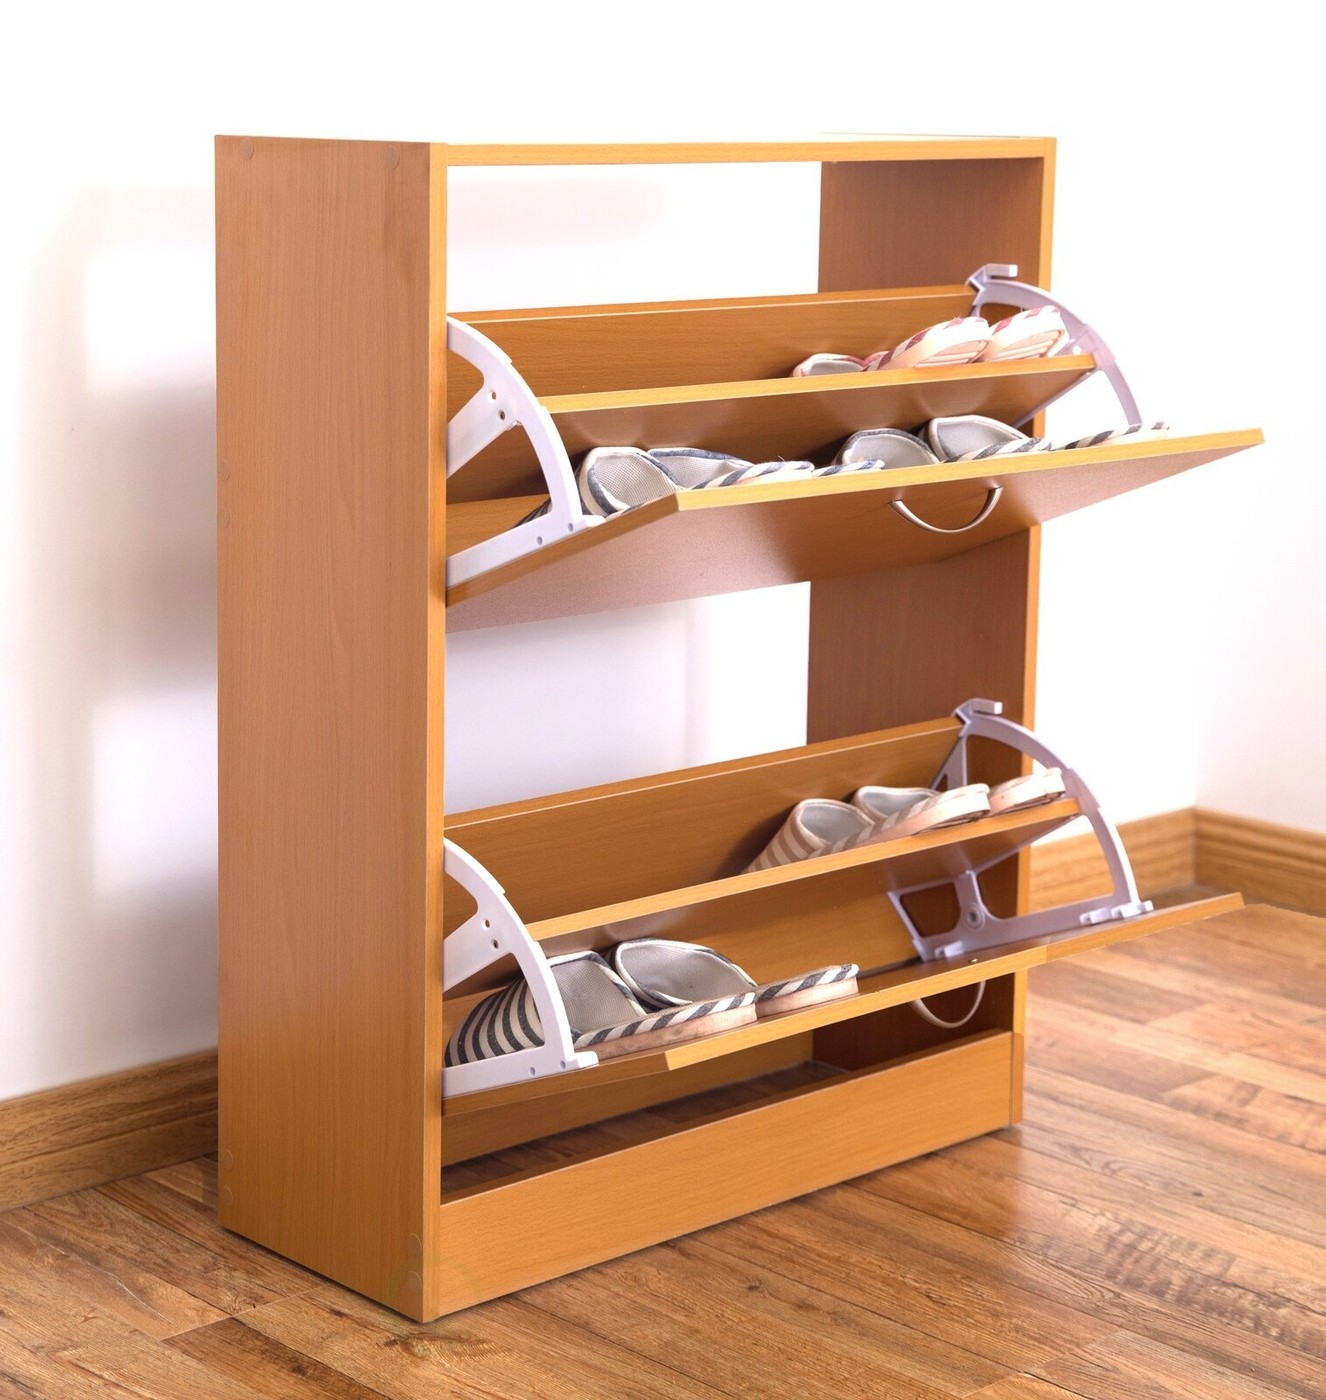 https://visualhunt.com/photos/16/manufactured-wood-shoe-storage-cabinet.jpeg